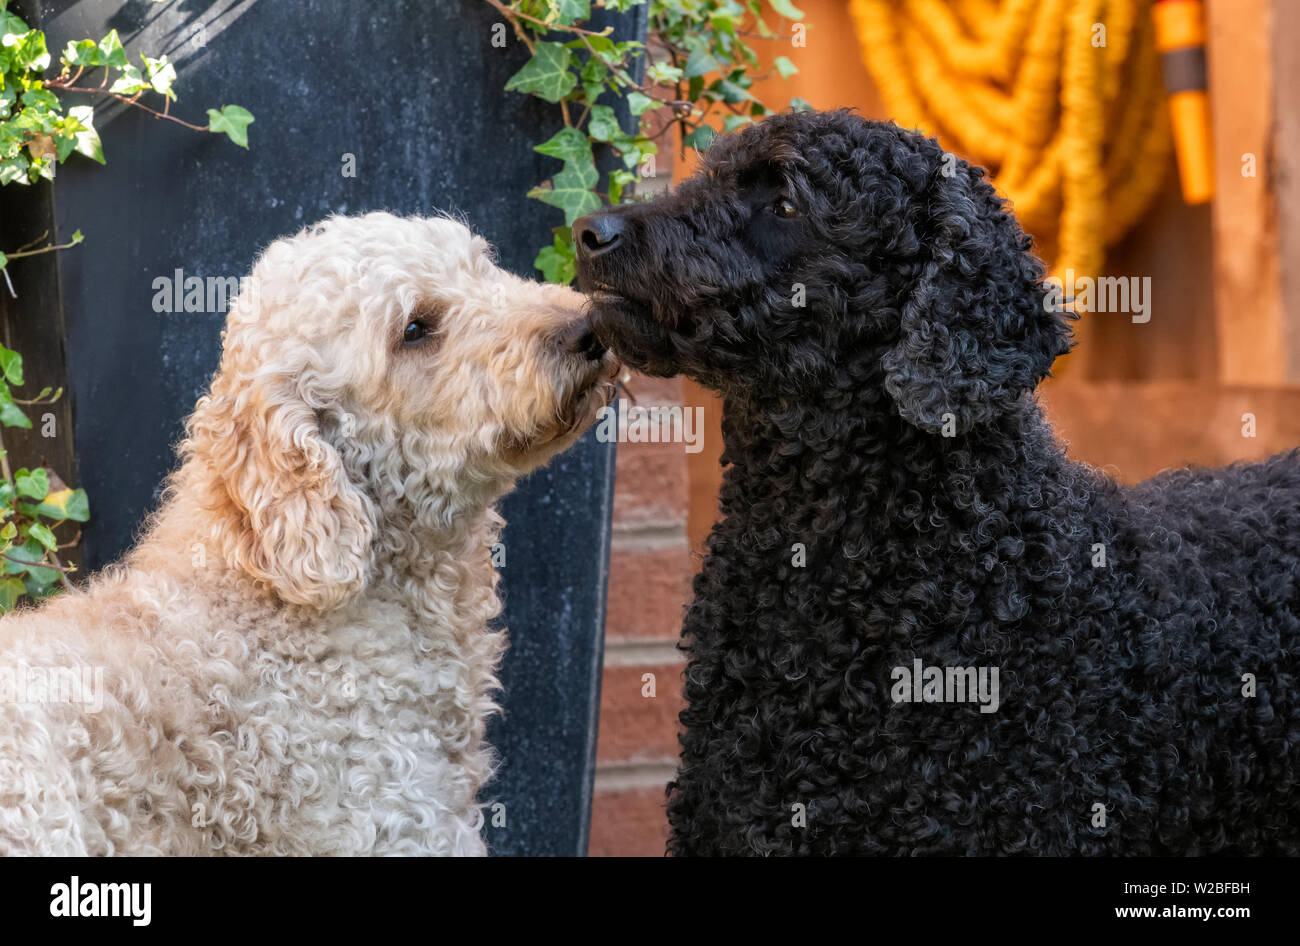 Un color beige Labradoodle og nuzzling una leggermente più grande nero cane Labradoodle Foto Stock